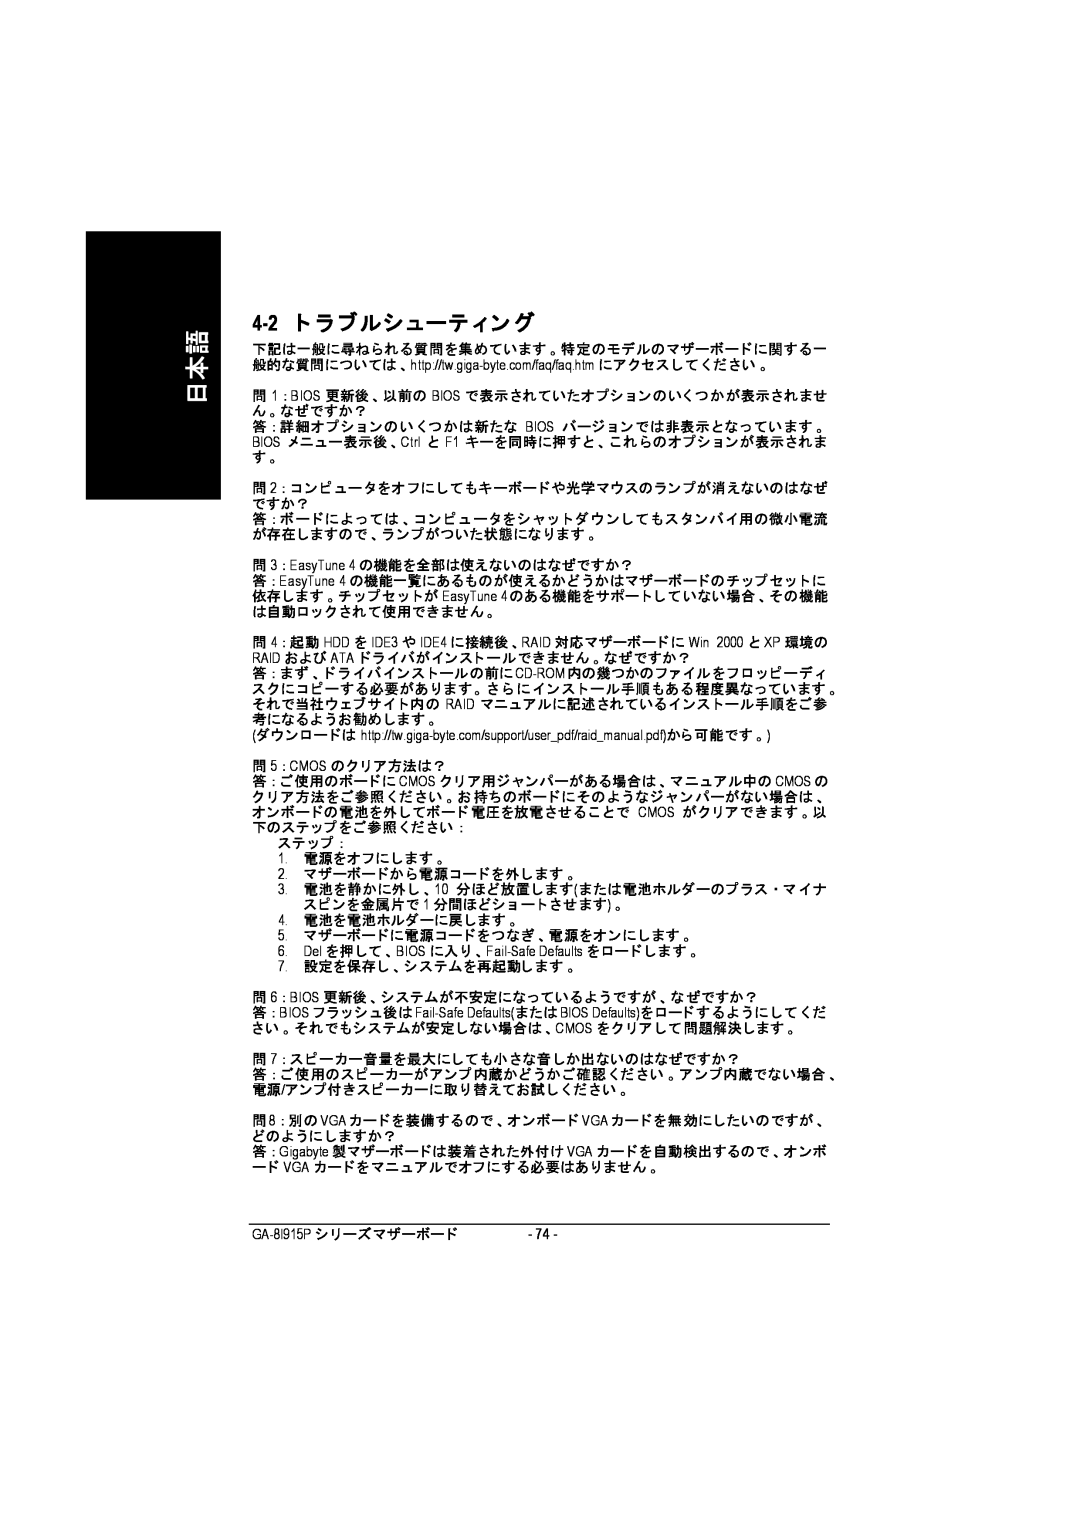 Intel GA-8I915P manual 4-2 ト ラ ブルシューテ ィン グ 